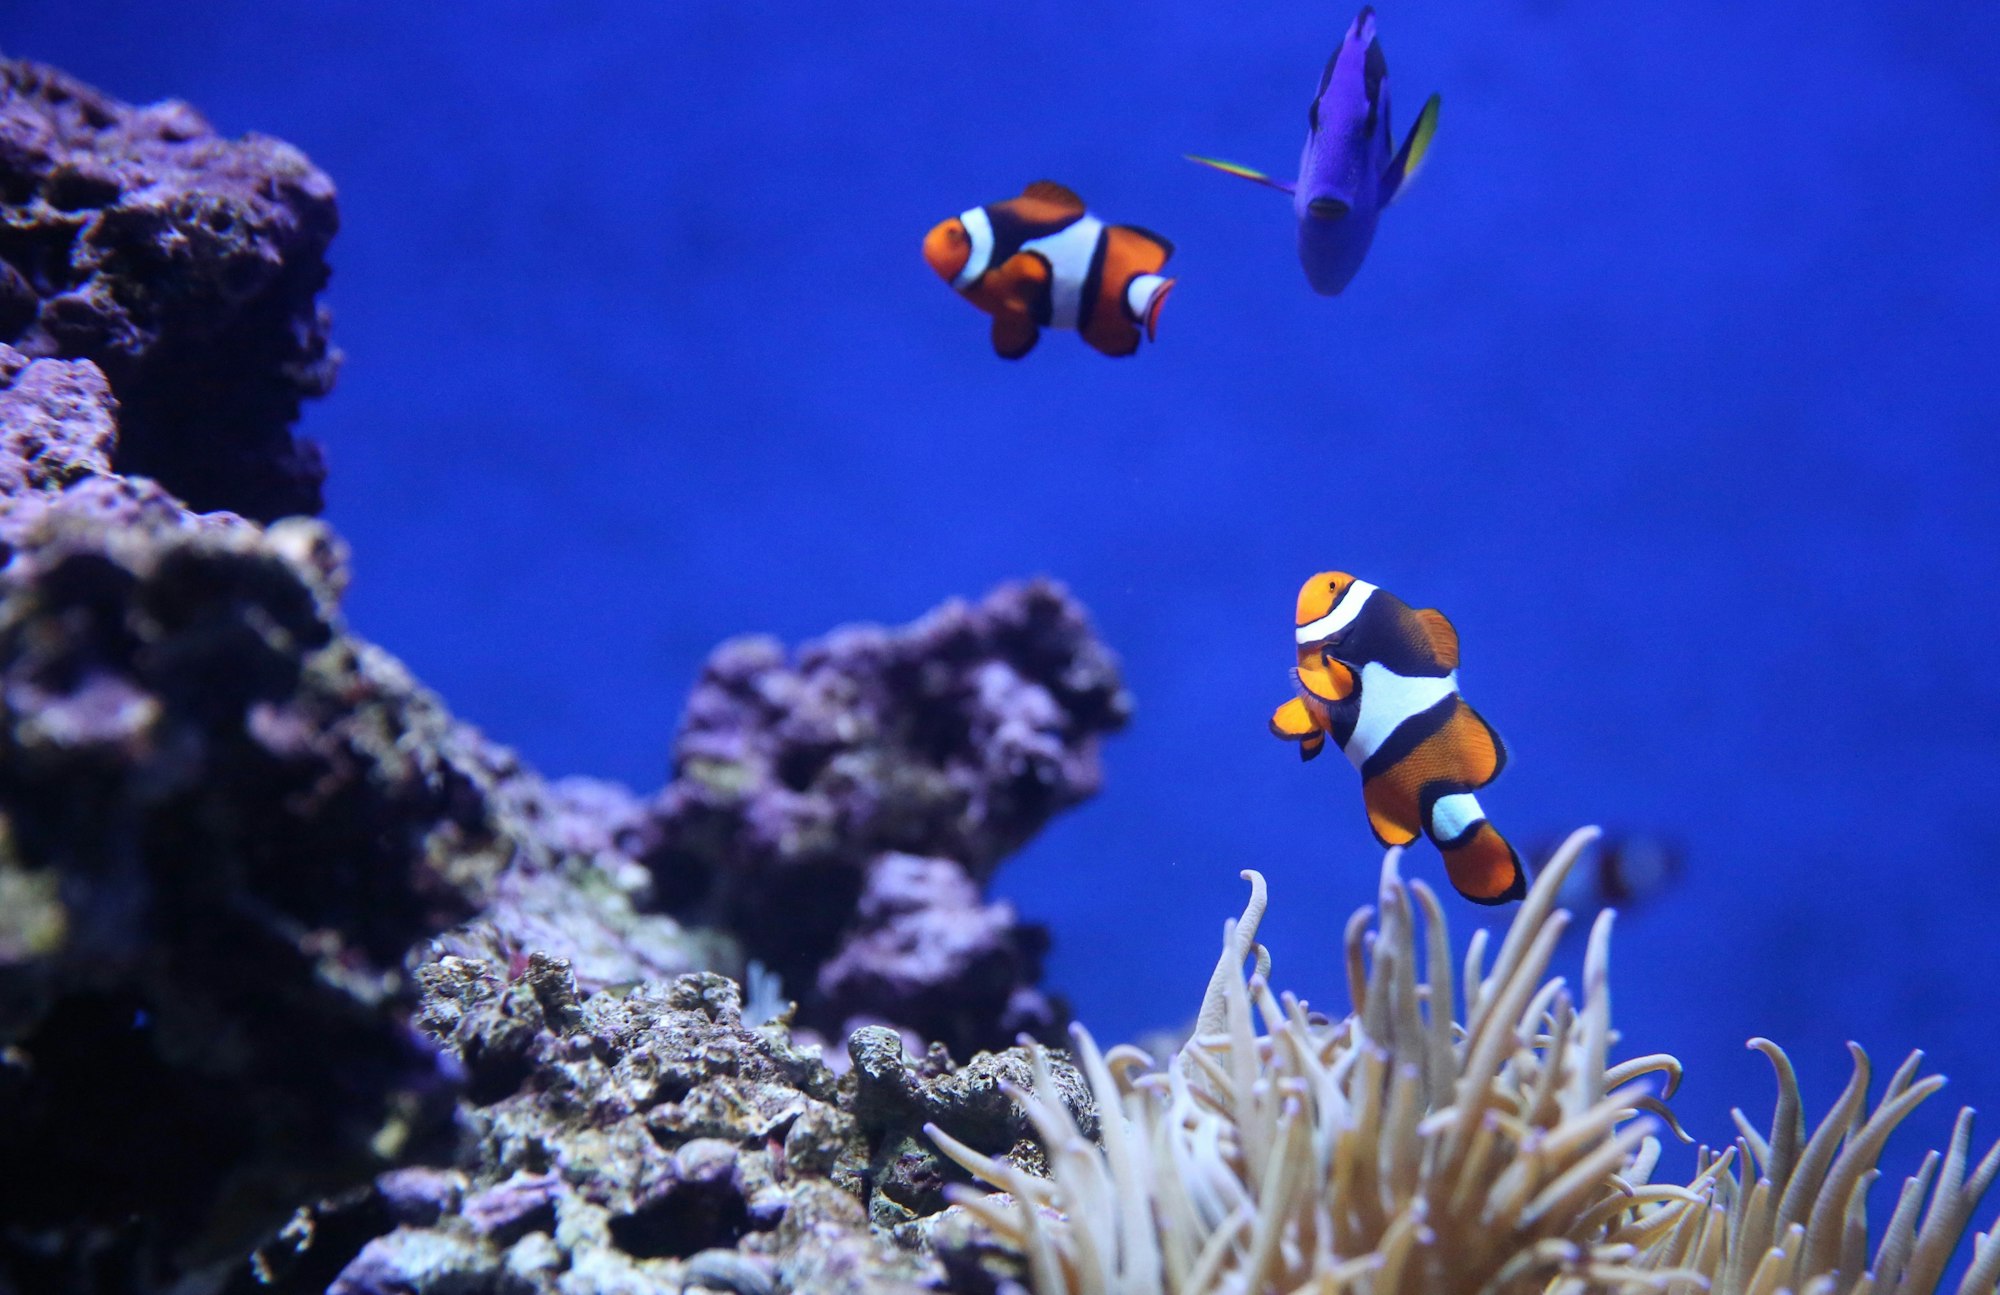 Just Nemo Dory & Marlin having fun